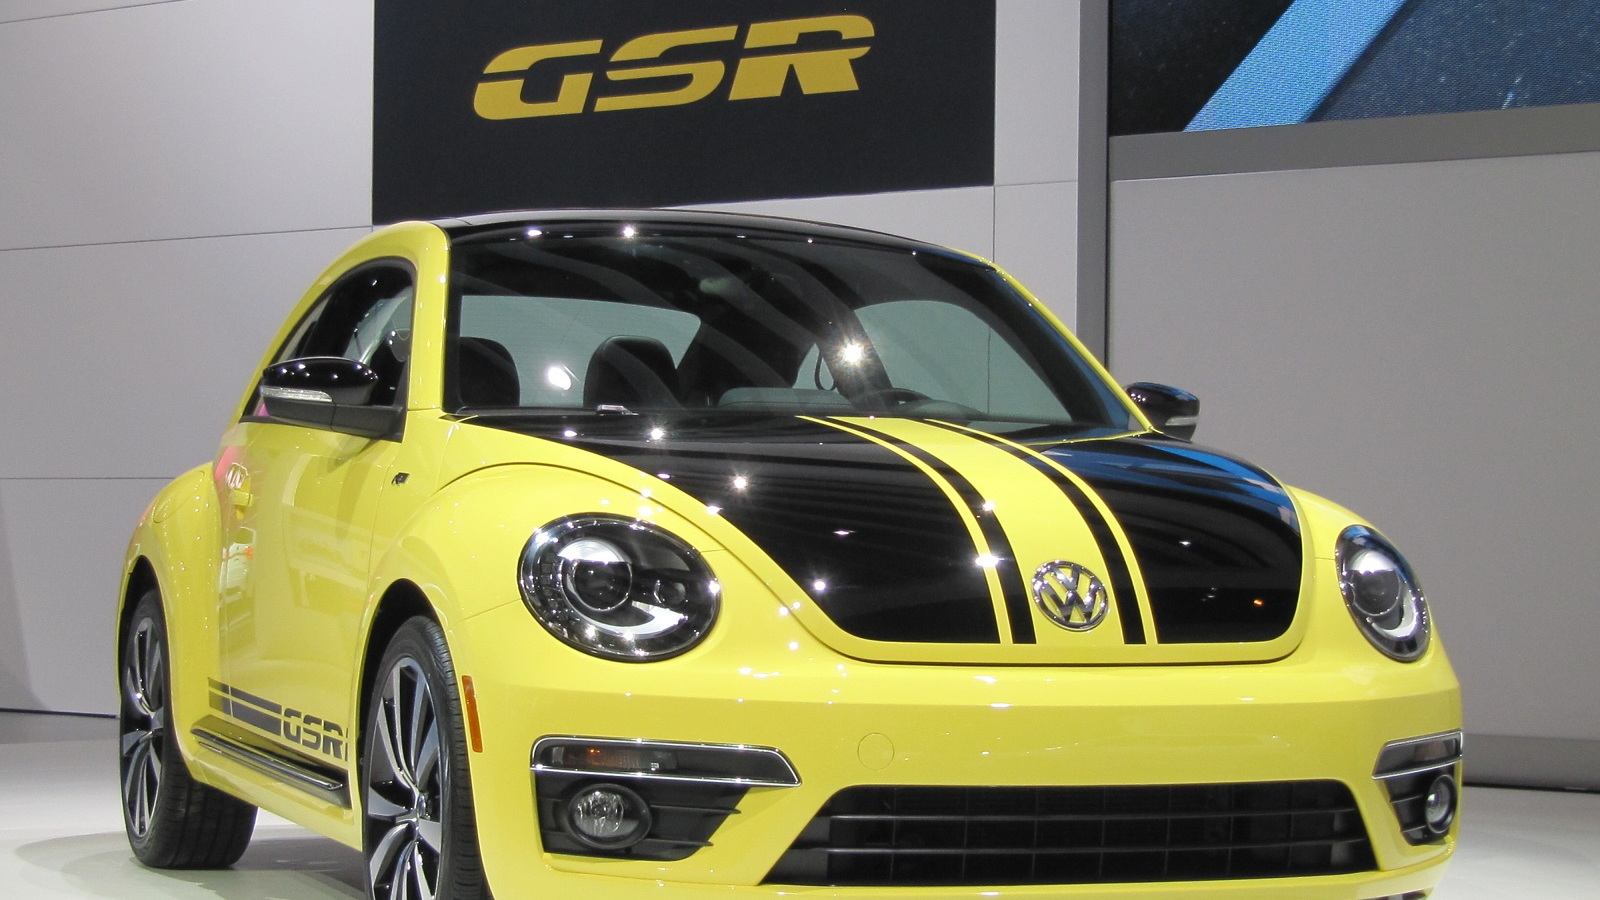 Volkswagen Beetle GSR, 2013 Chicago Auto Show